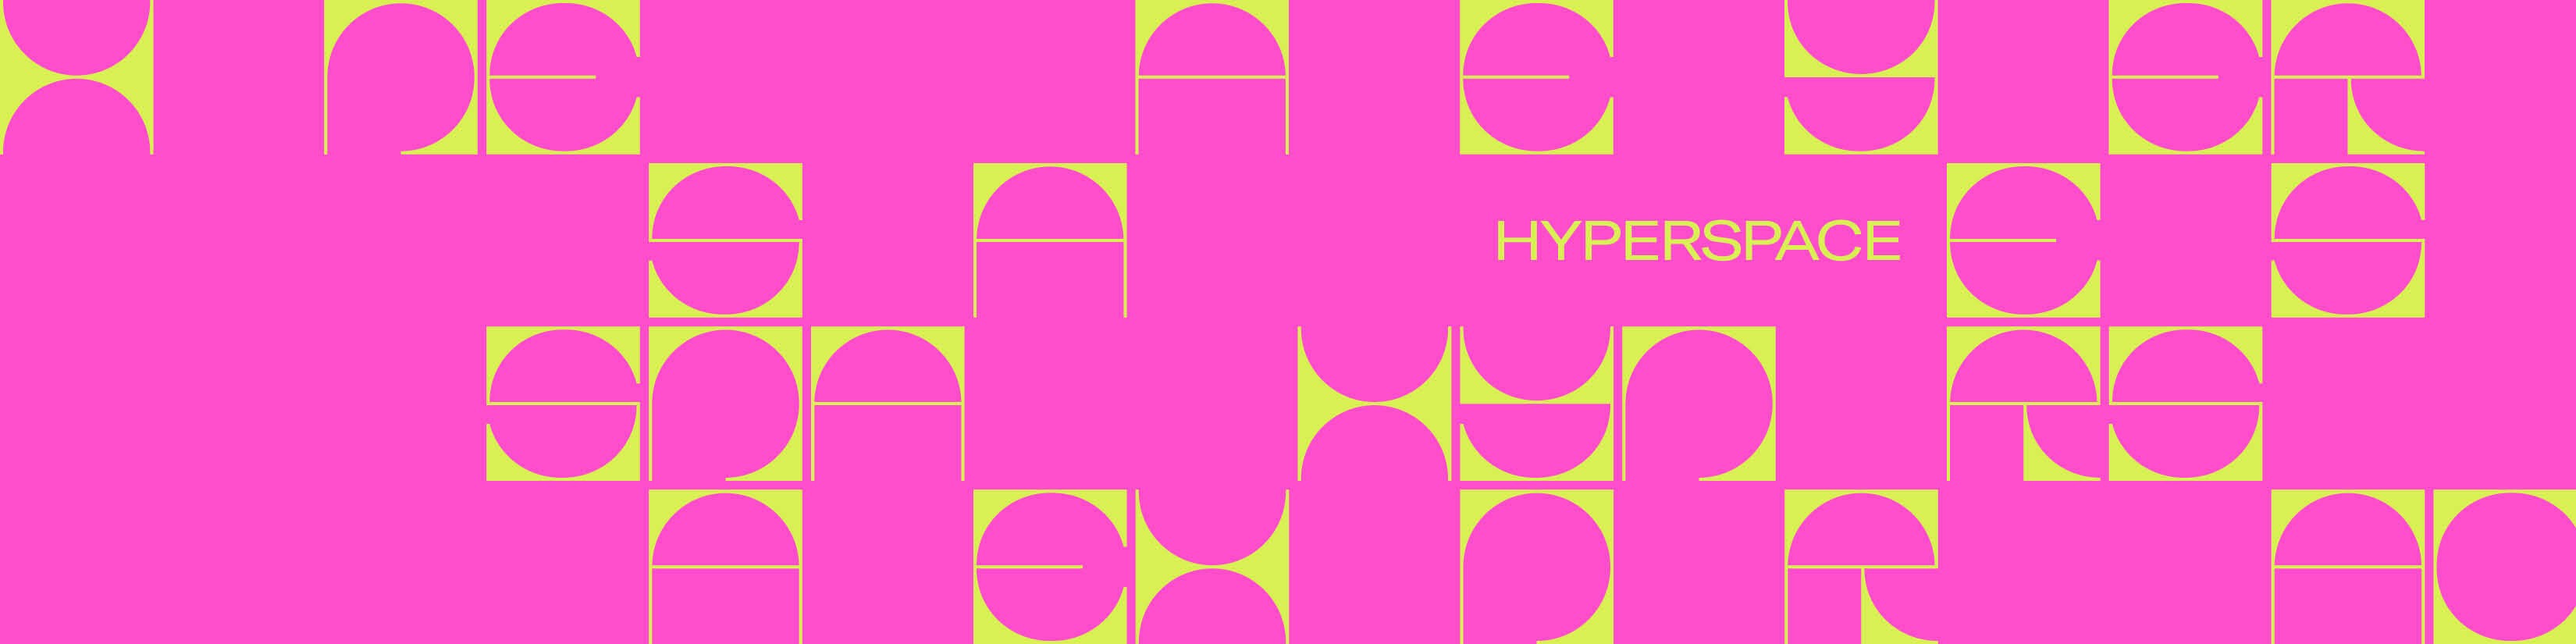 hyperspace | linkedin